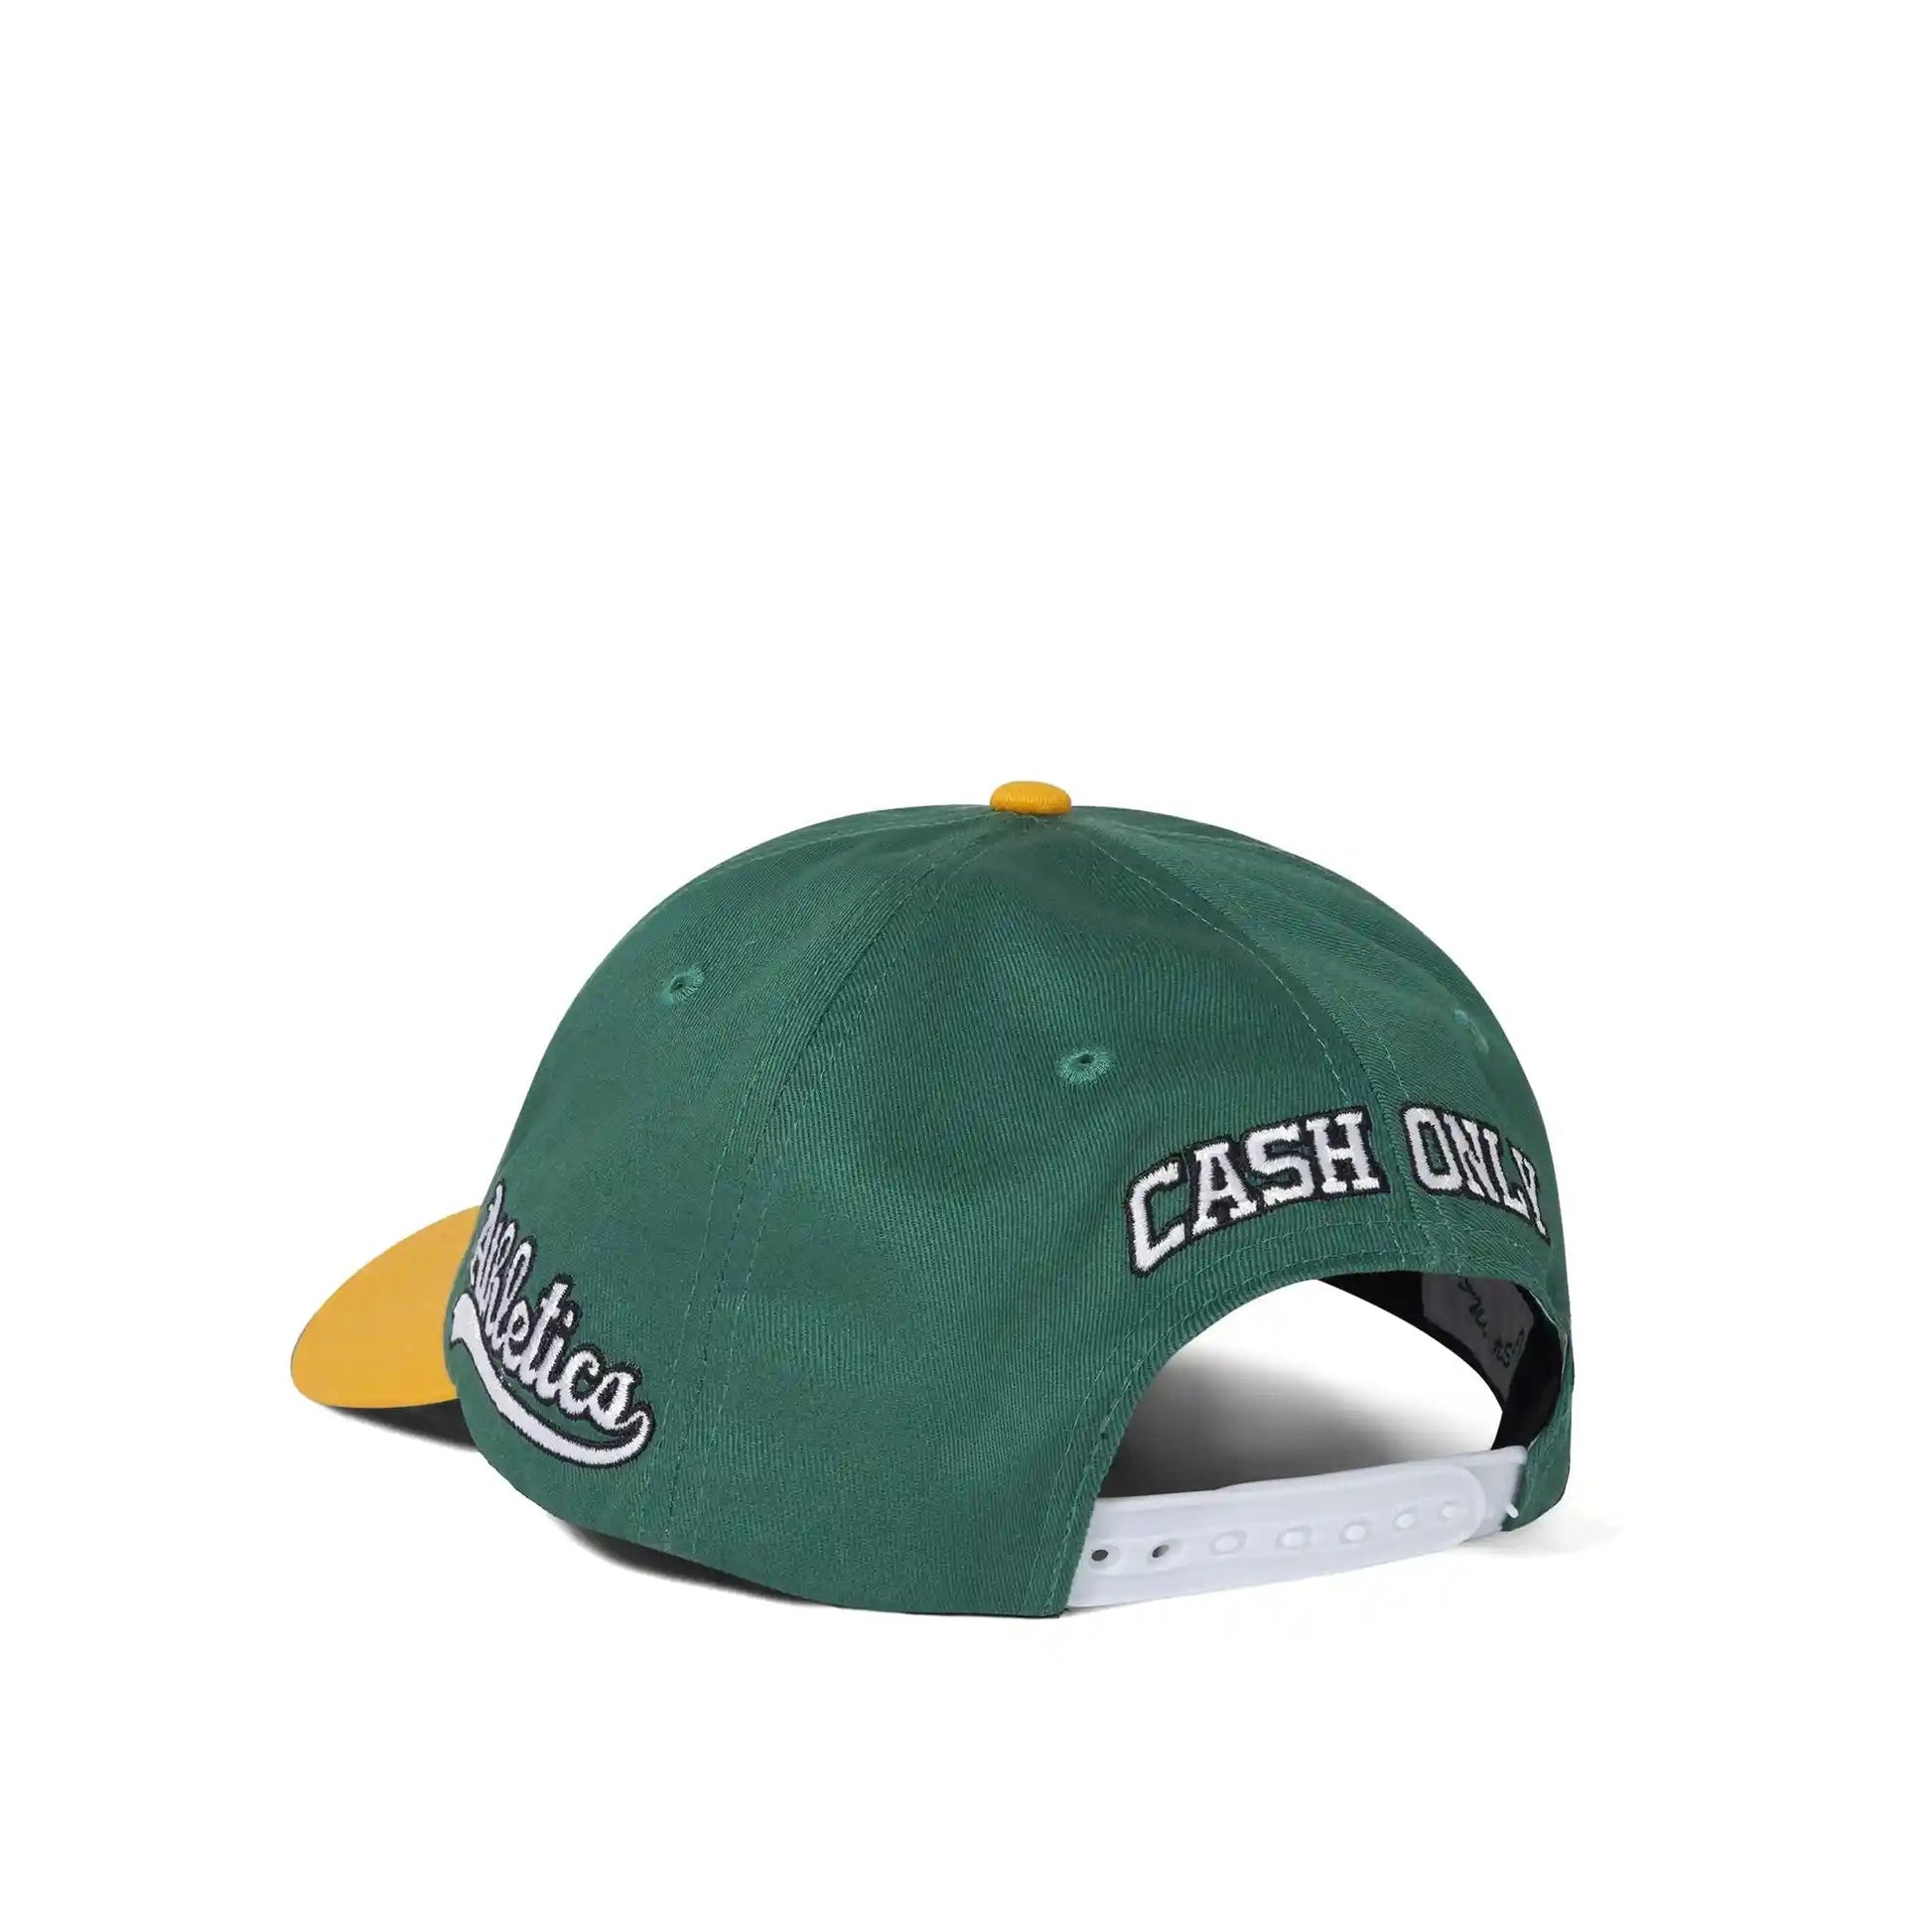 Cash Only Ballpark Snapback Cap, green / gold - Tiki Room Skateboards - 2